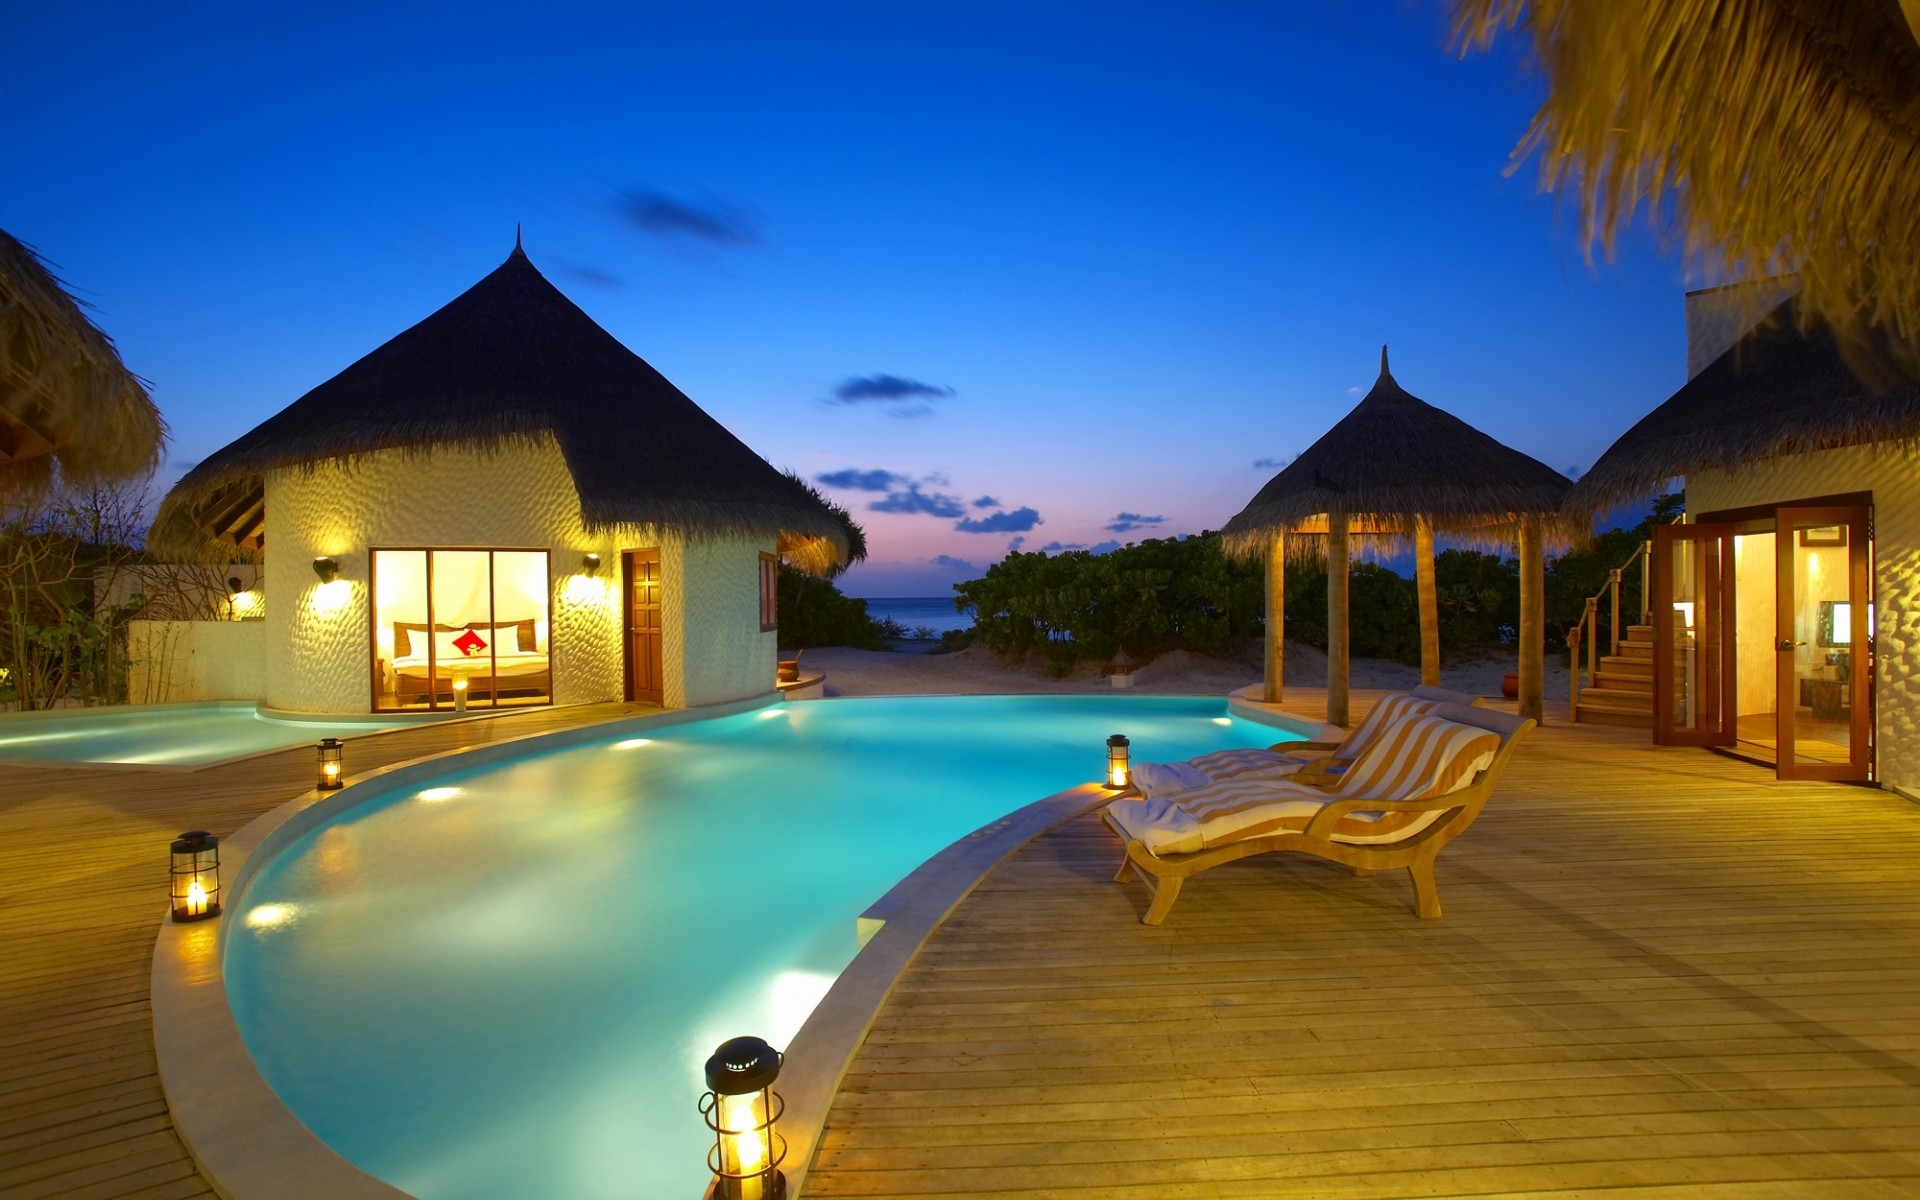 Maldives 5 Star Resort for 1920 x 1200 widescreen resolution